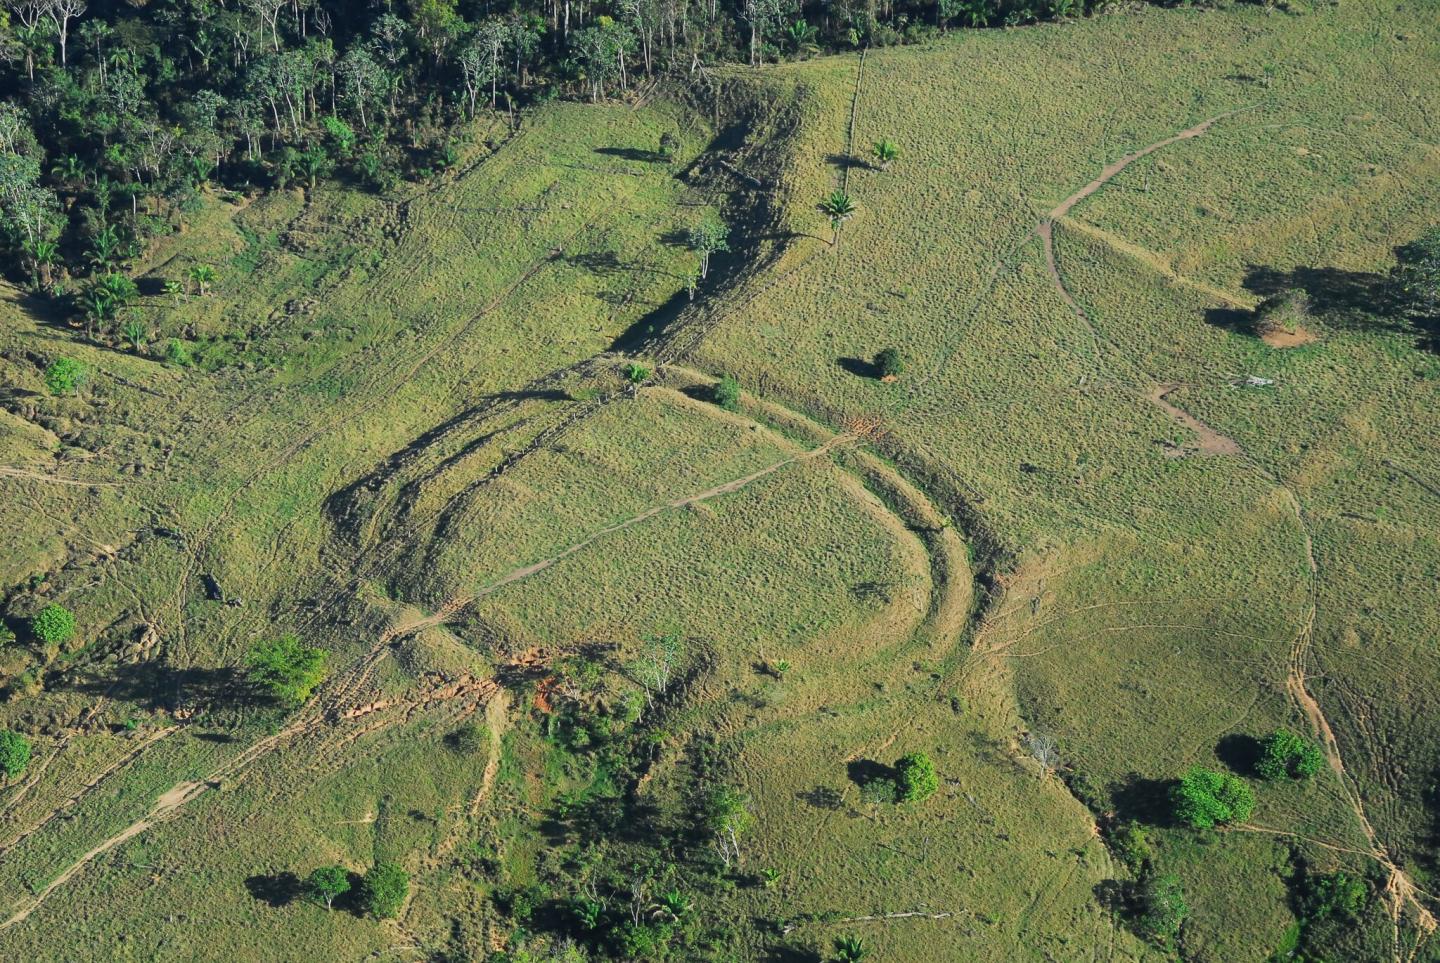 Amazon landscape geoglyphs